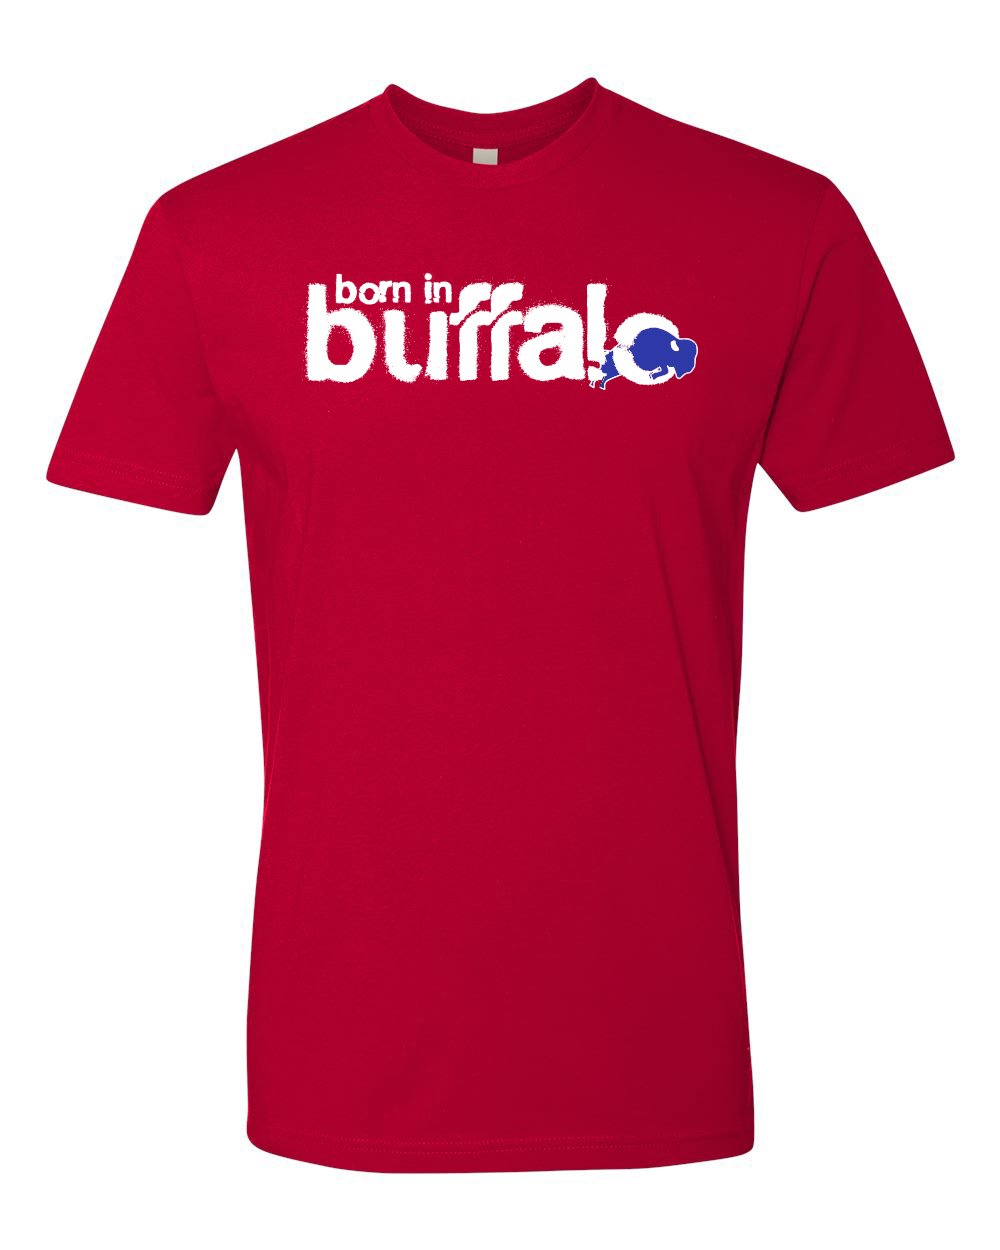 billedtekst skandaløse Fonetik borninbuffalo — Born in Buffalo Classic T-shirt RED